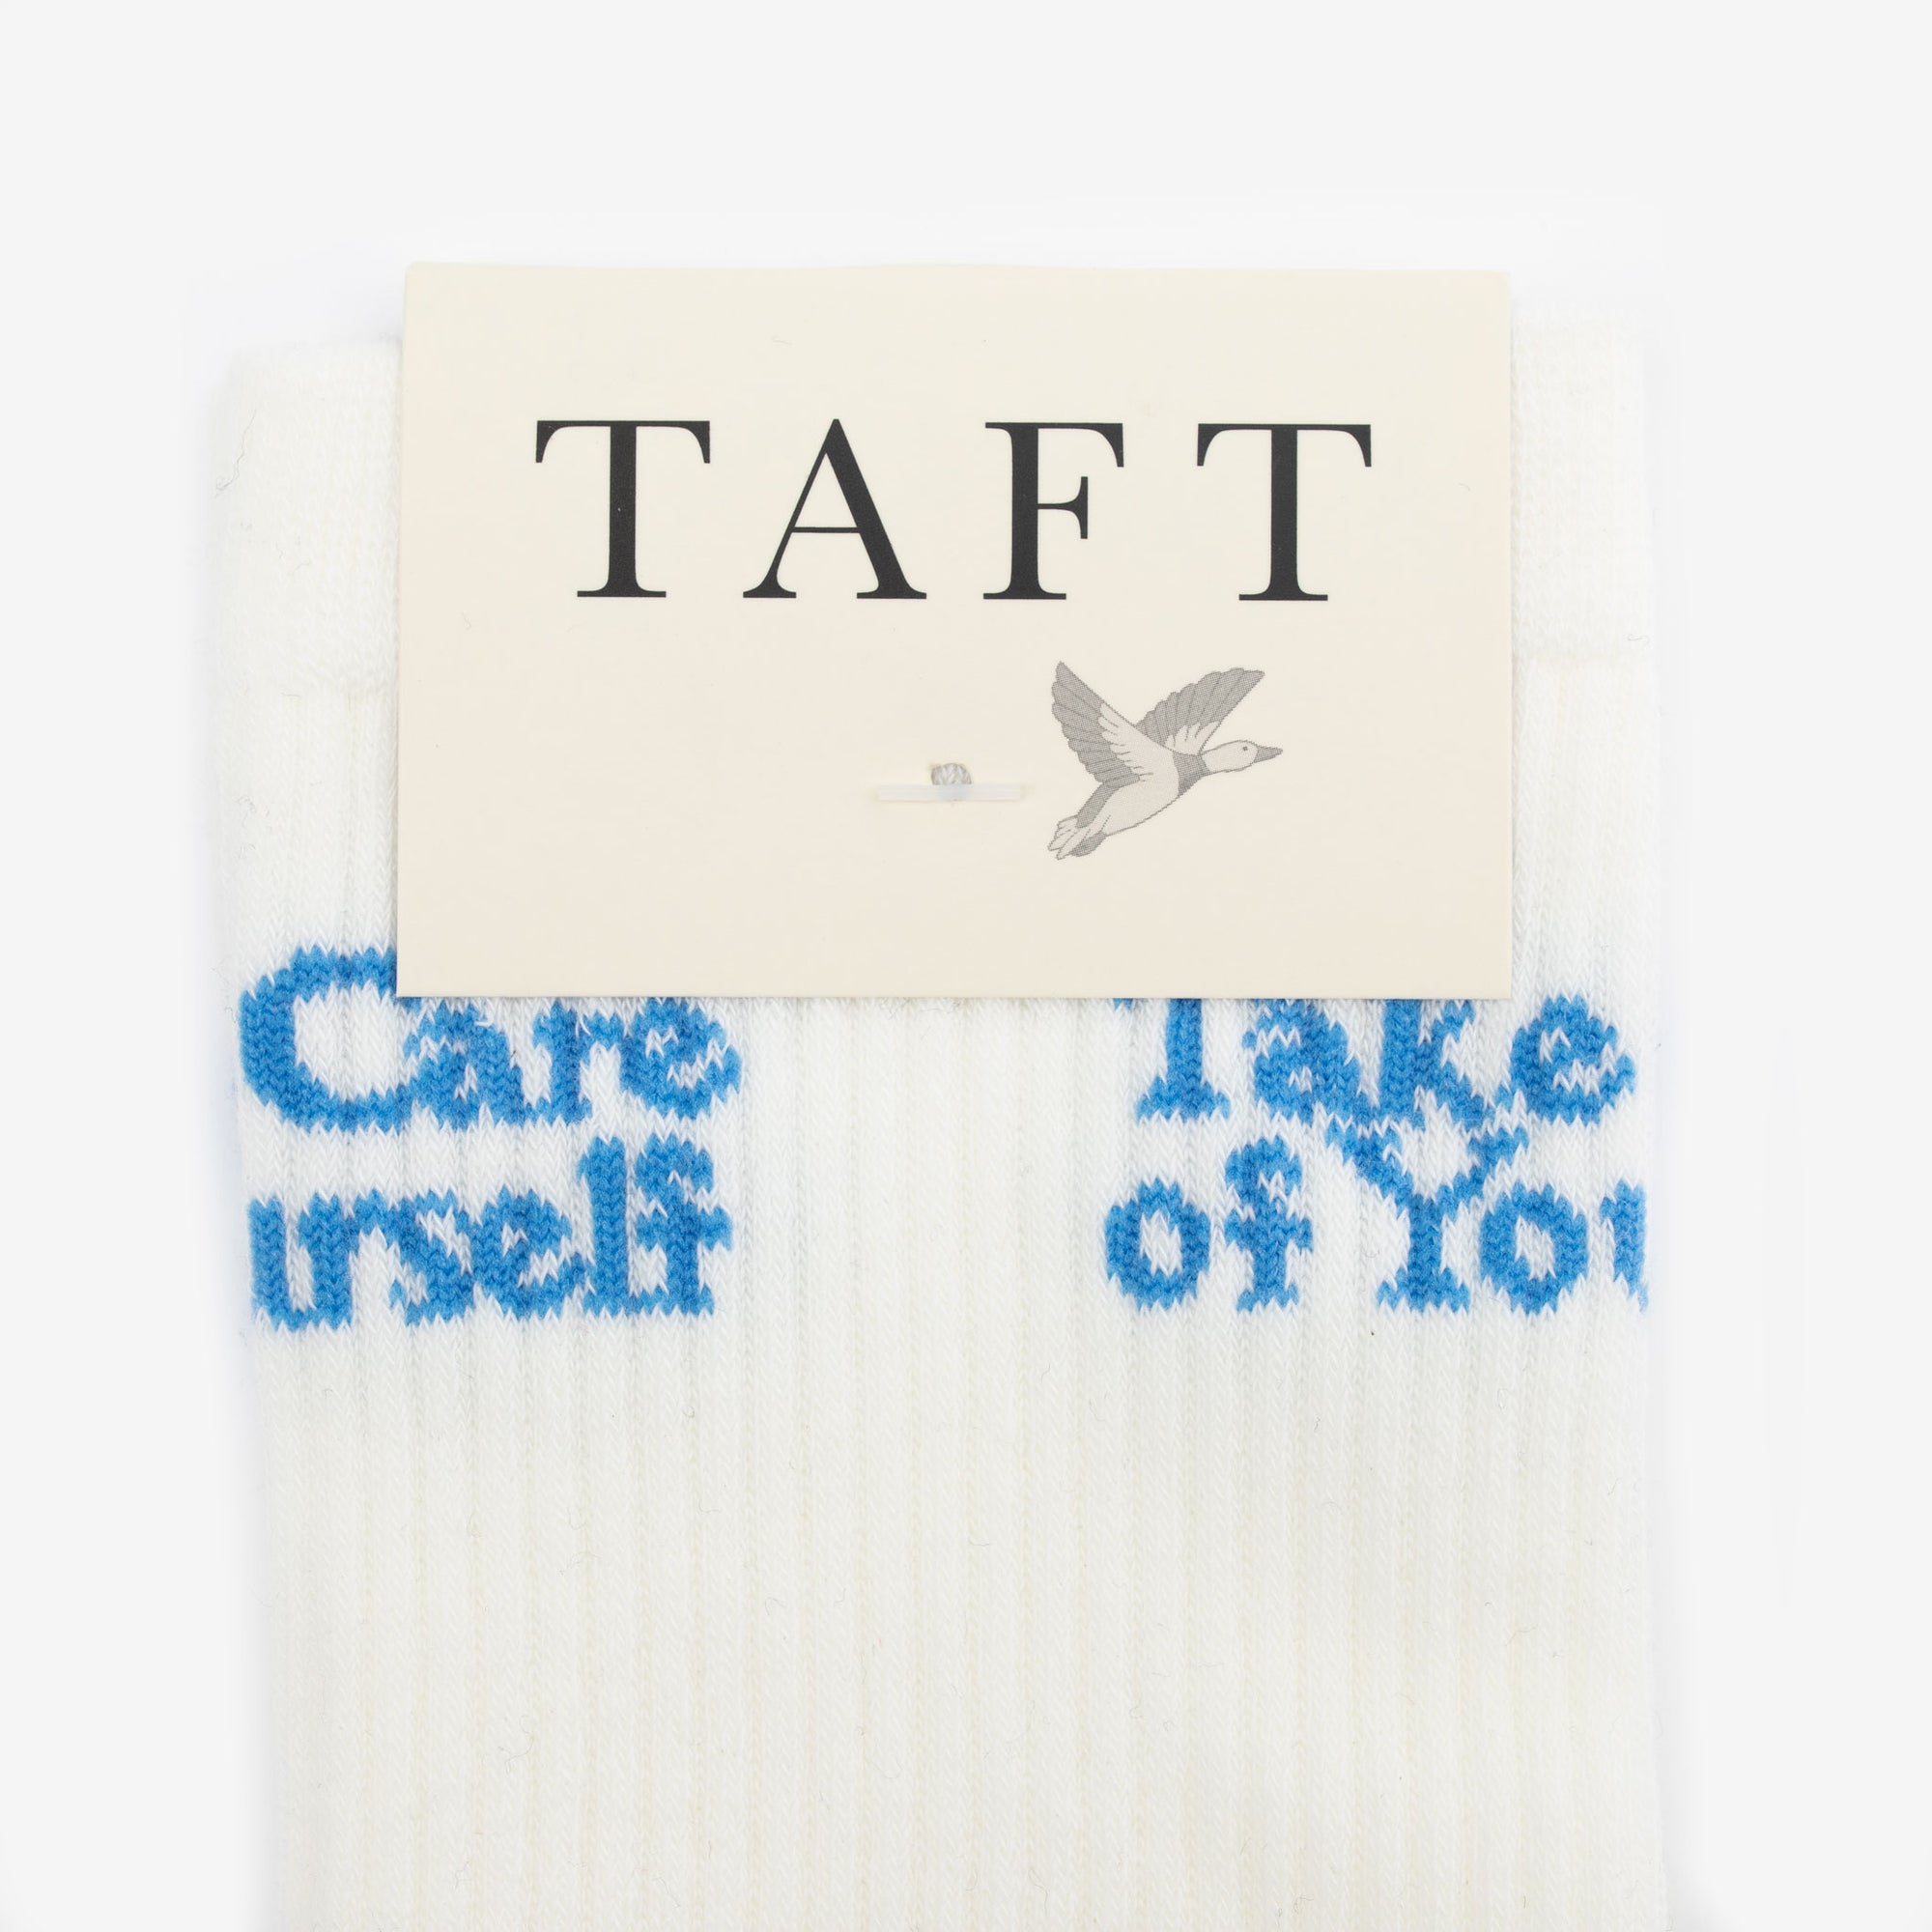 The Take Care Crew Sock in Cream